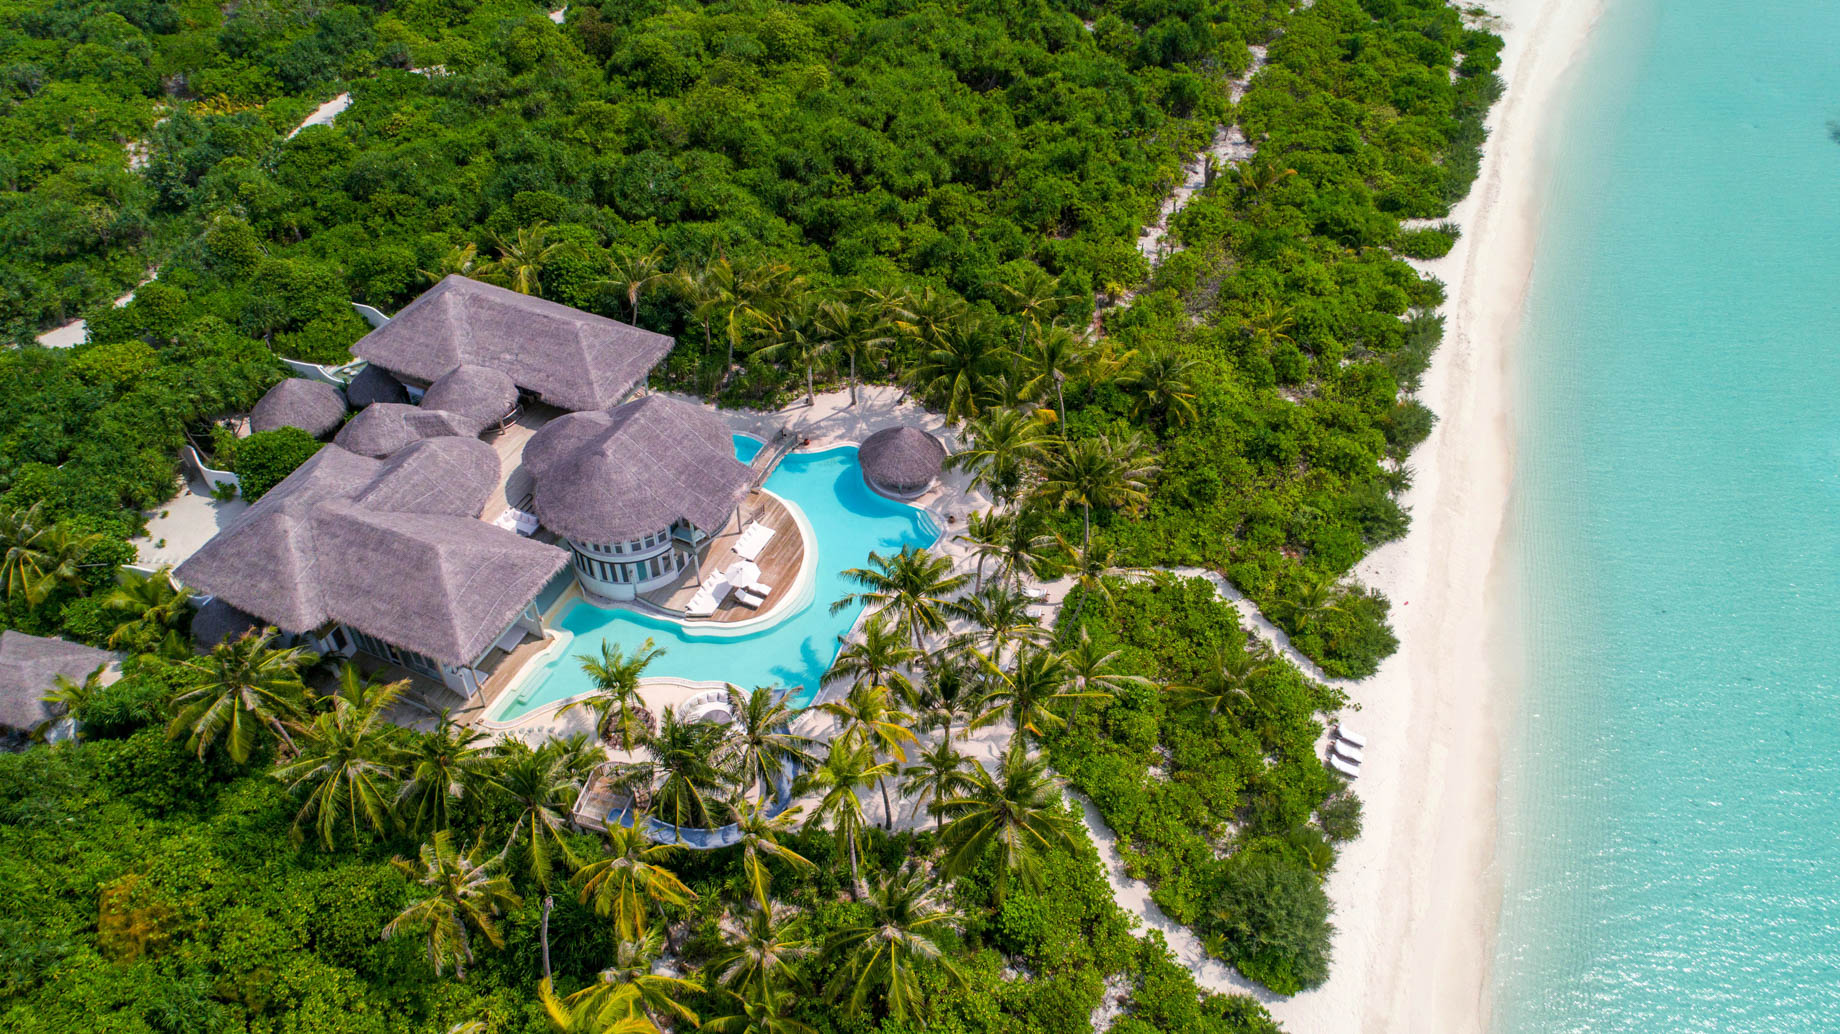 Soneva Jani Resort - Noonu Atoll, Medhufaru, Maldives - 4 Bedroom Island Reserve Villa Beachfront Aerial